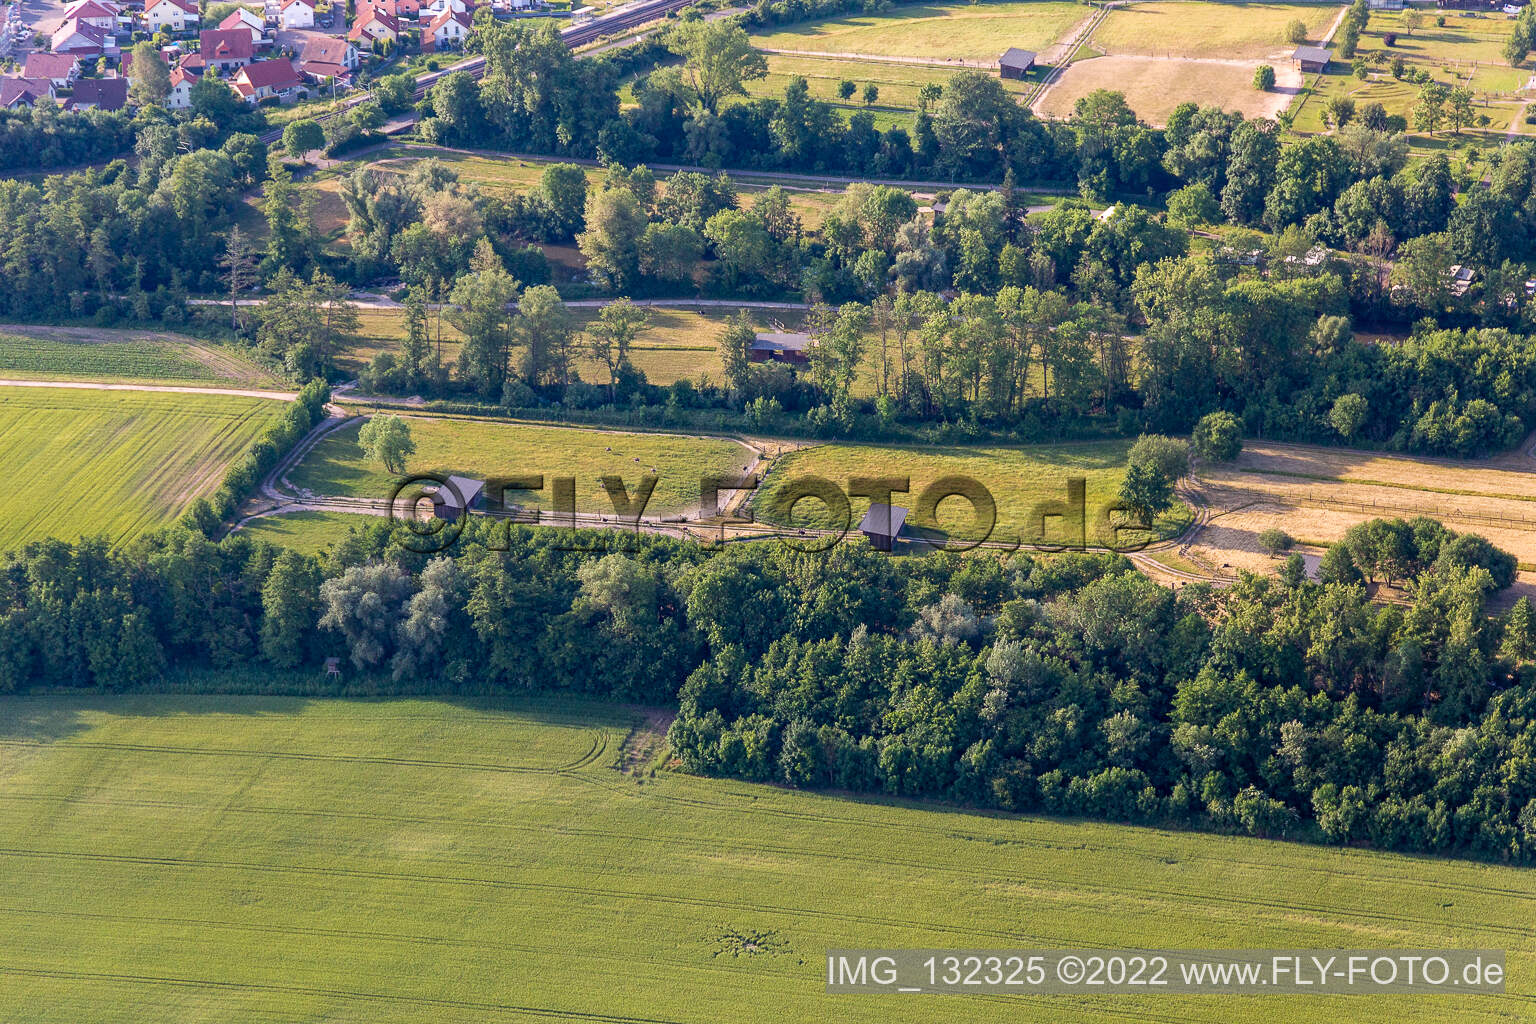 Mhou ostrich farm in Rülzheim in the state Rhineland-Palatinate, Germany